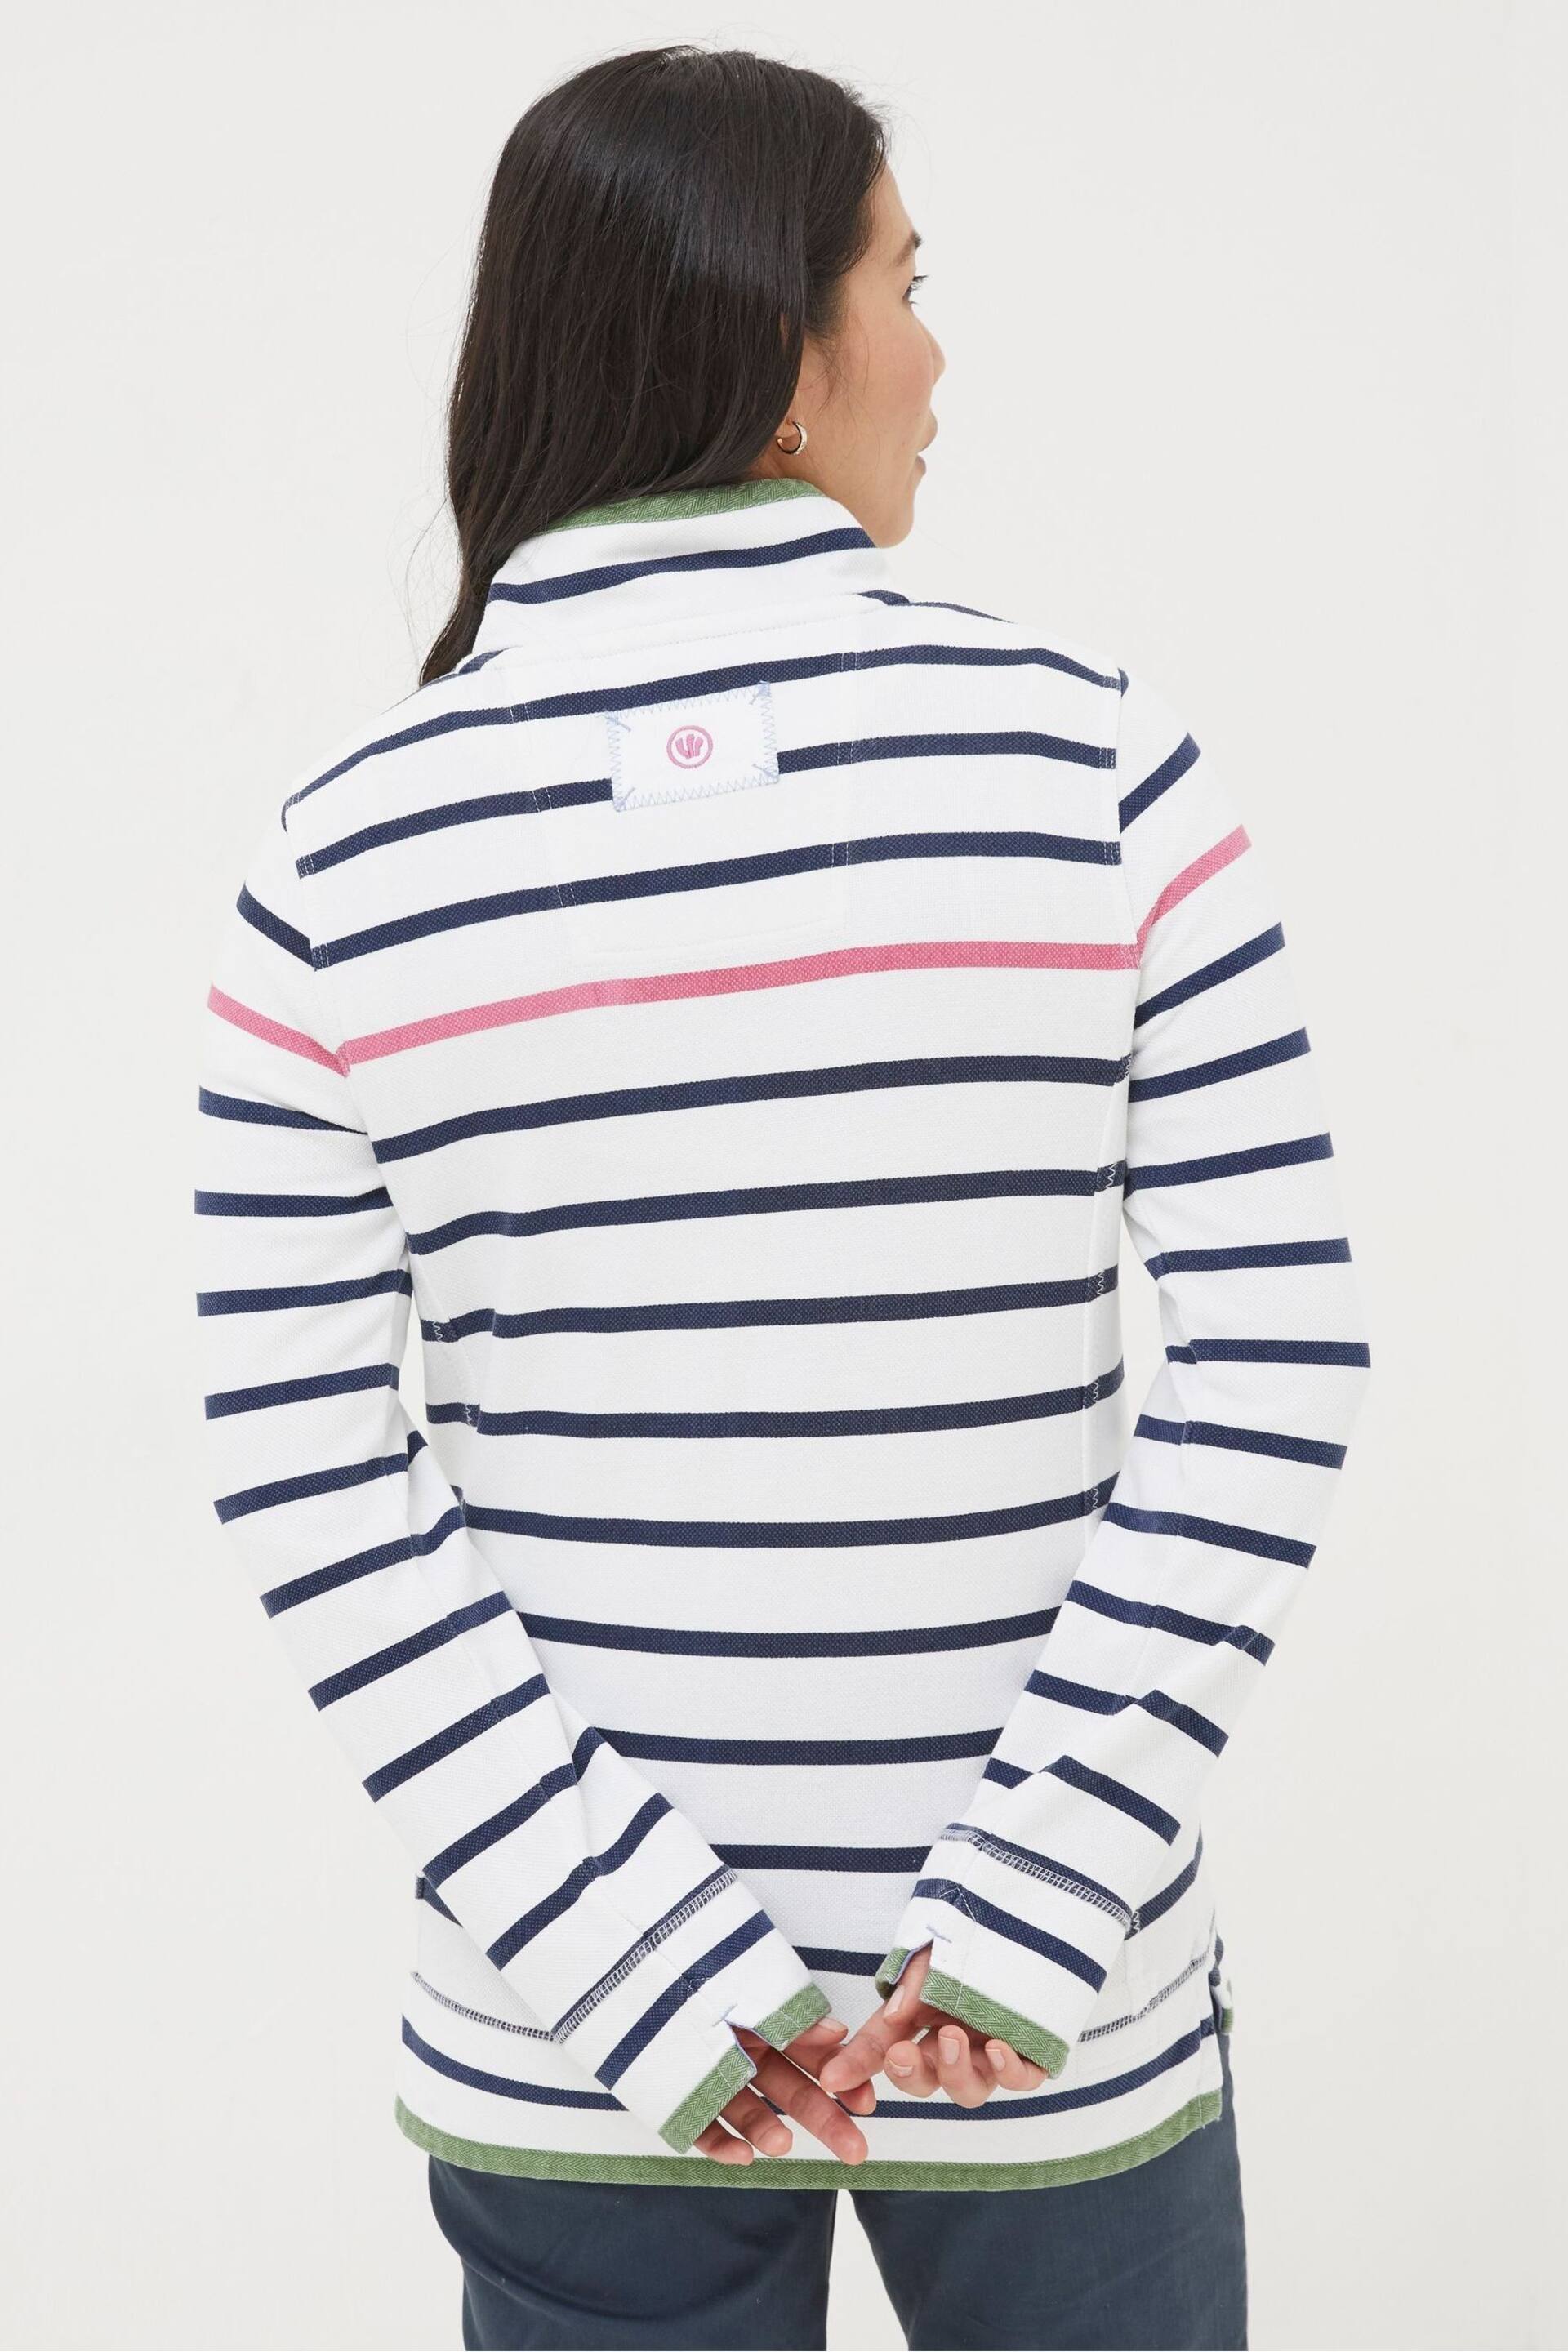 FatFace White Airlie Breton Stripe Sweatshirt - Image 2 of 6